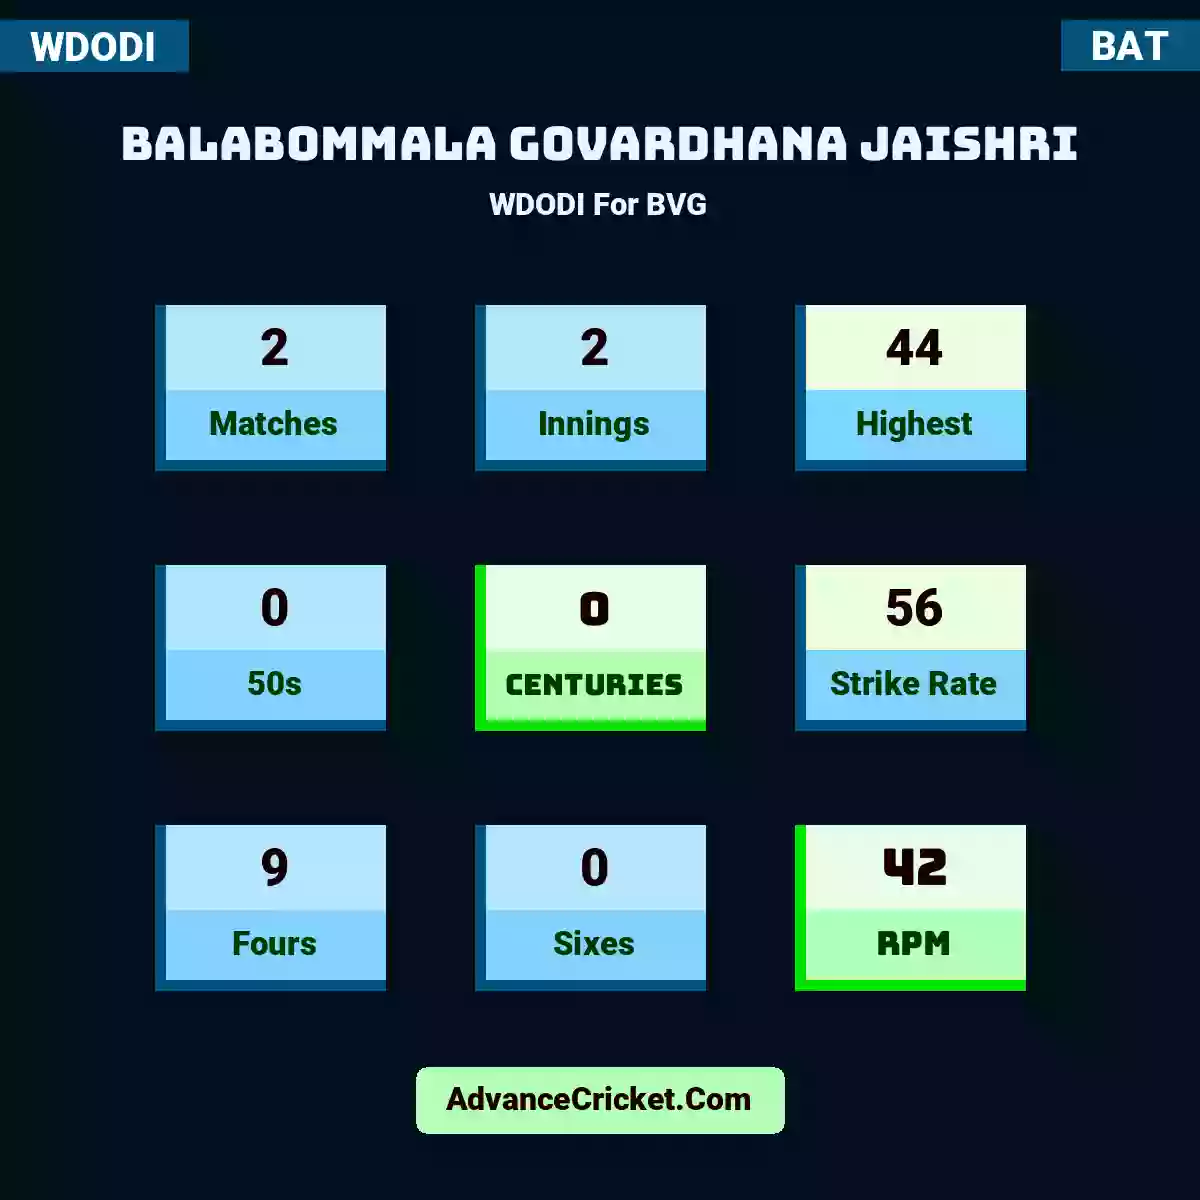 Balabommala Govardhana Jaishri WDODI  For BVG, Balabommala Govardhana Jaishri played 2 matches, scored 44 runs as highest, 0 half-centuries, and 0 centuries, with a strike rate of 56. B.Govardhana.Jaishri hit 9 fours and 0 sixes, with an RPM of 42.